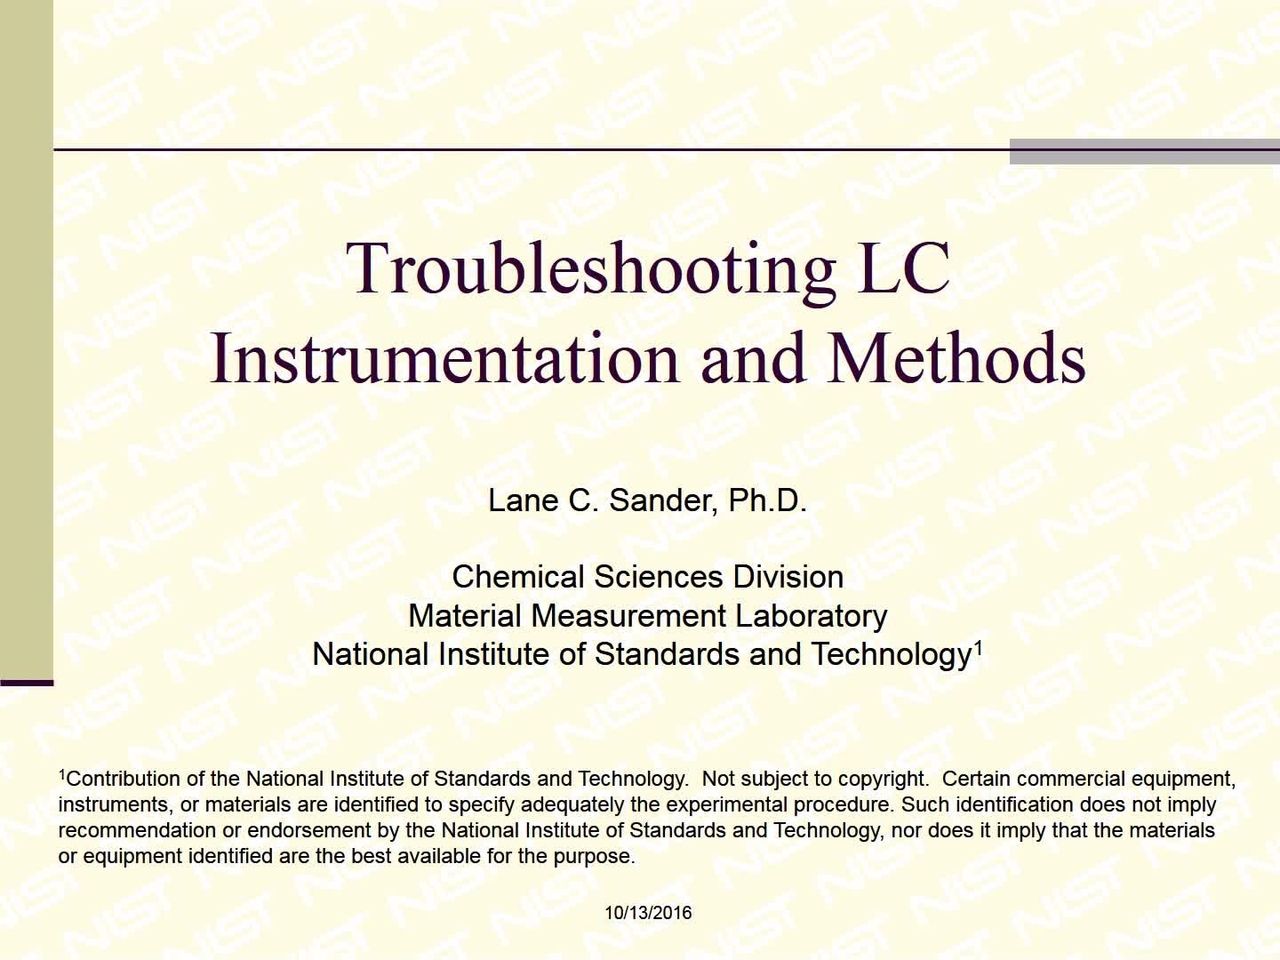 Troubleshooting Liquid Chromatographic Instrumentation and Methods